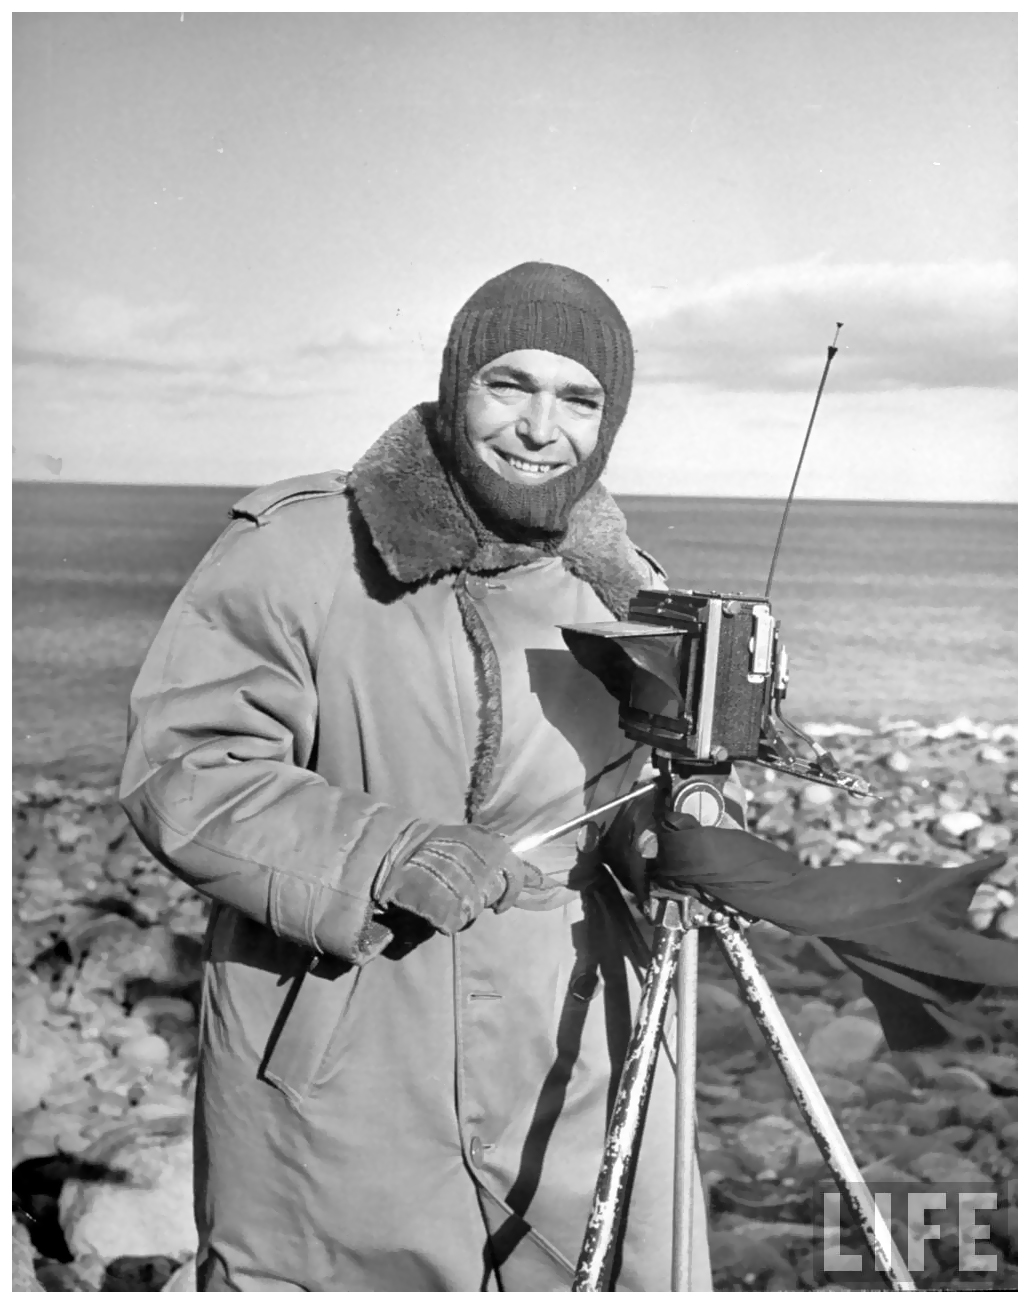 photographer-life-eliot-elisofon-on-assignment-dealing-with-atlantic-coastline-1946.jpeg